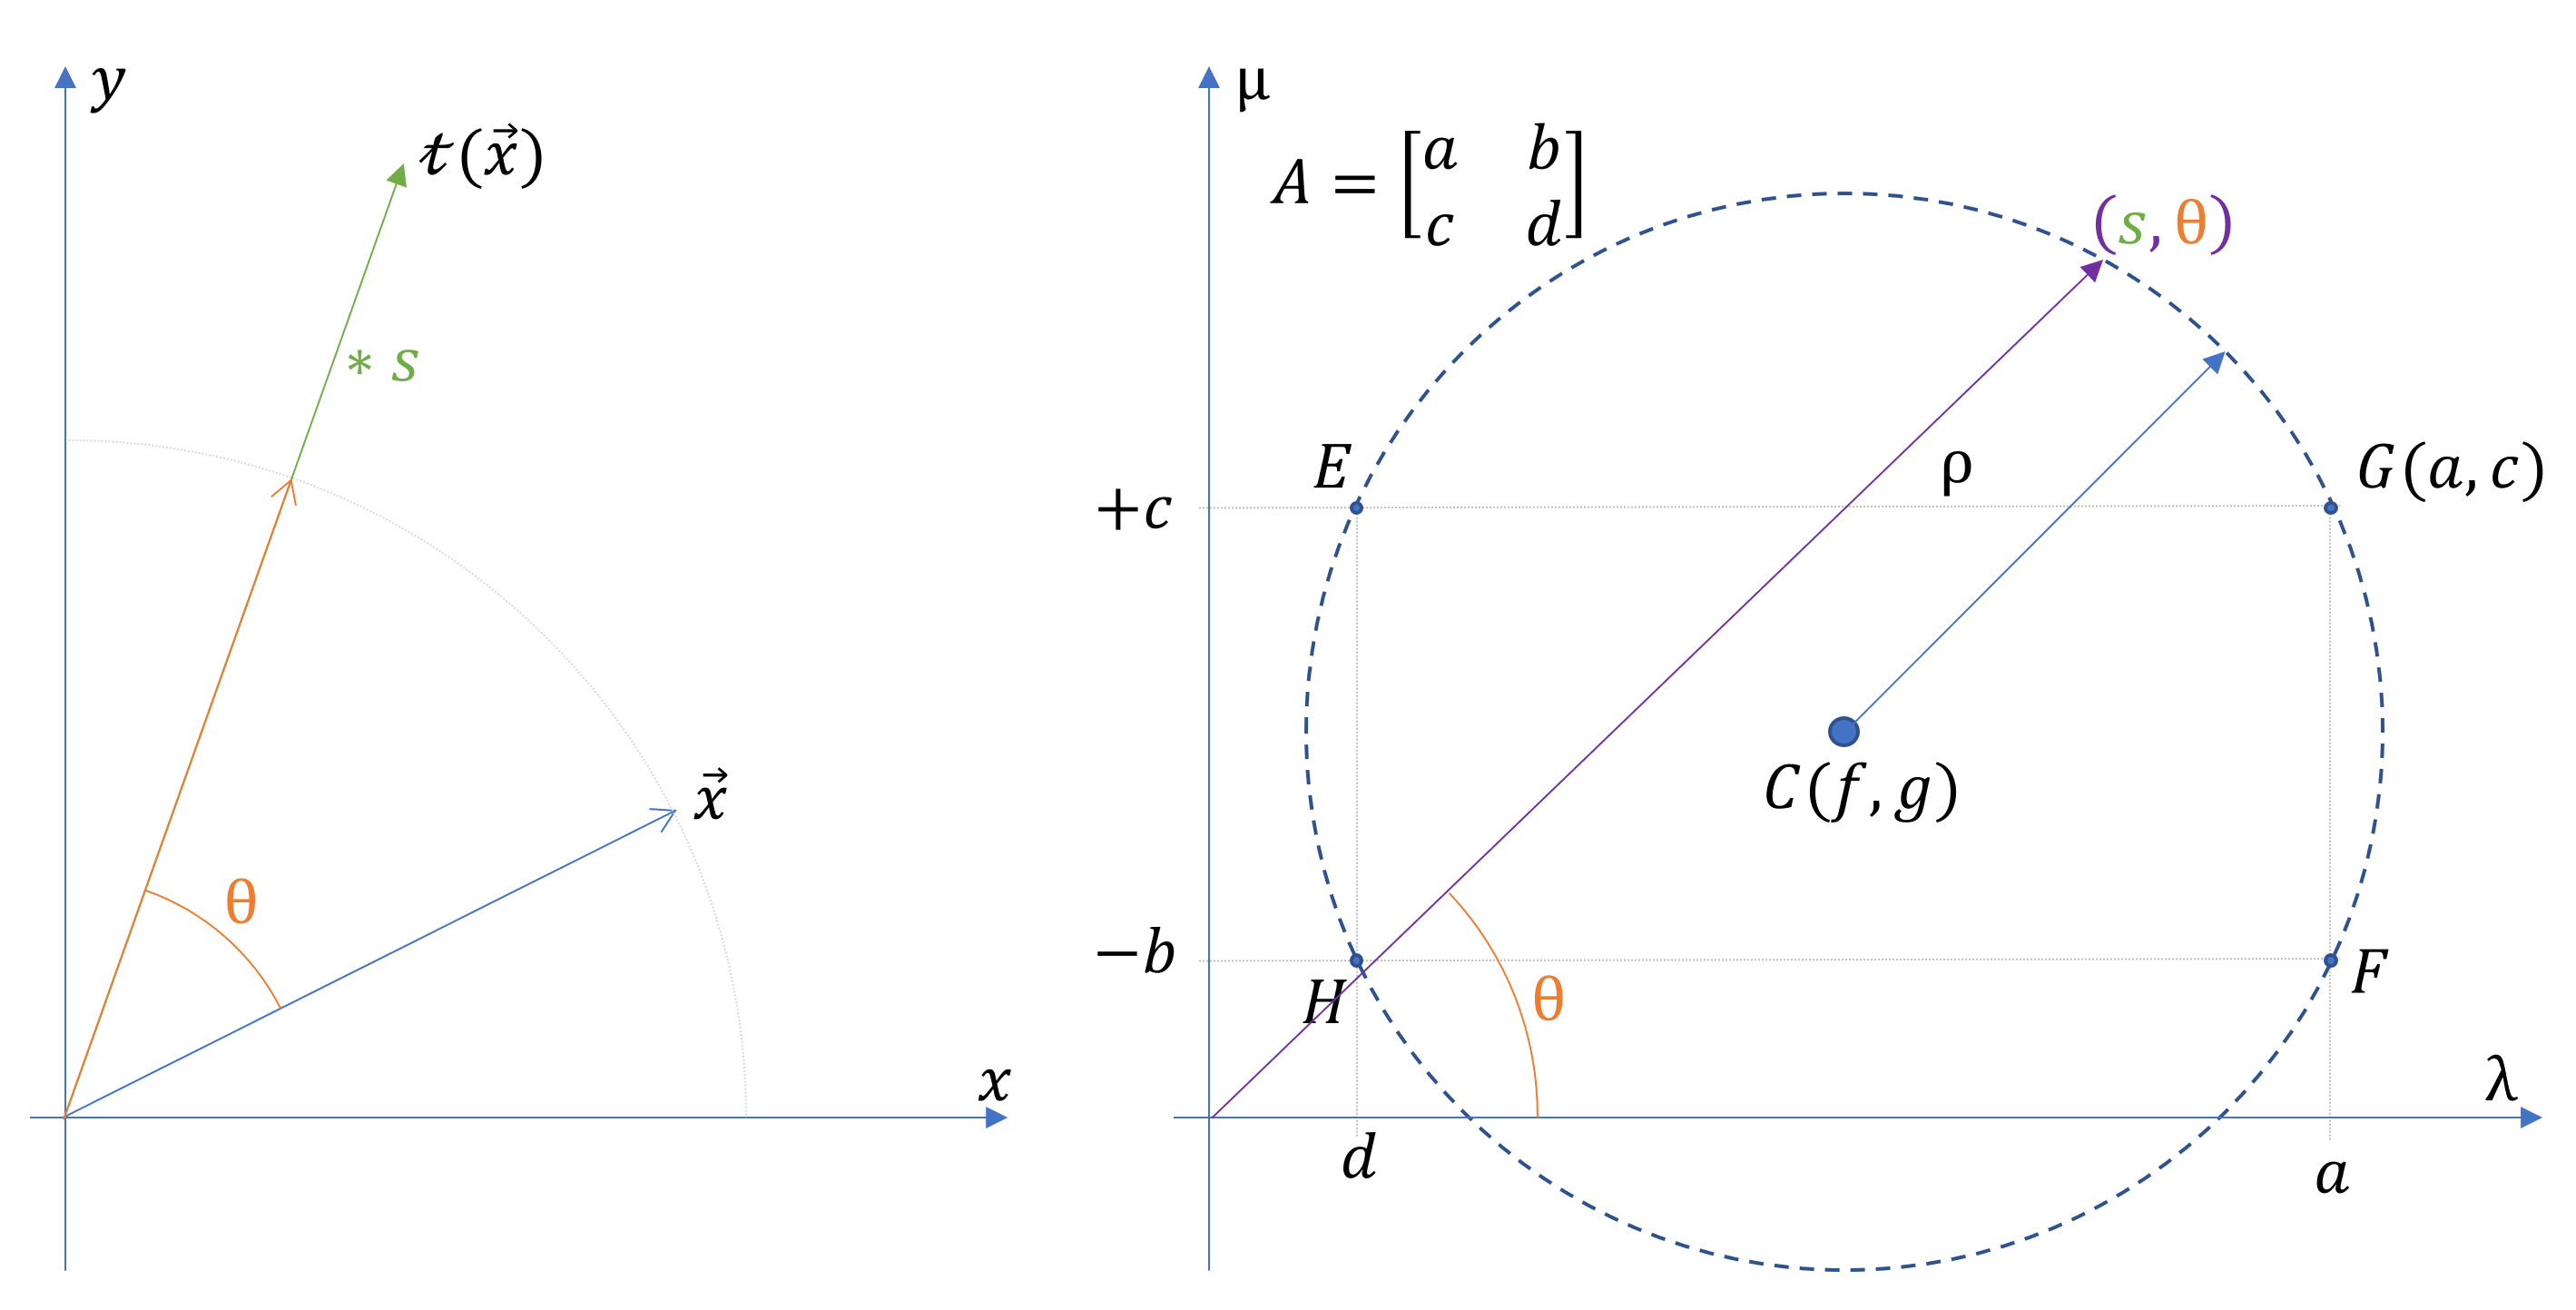 Eigencircle of the matrix A